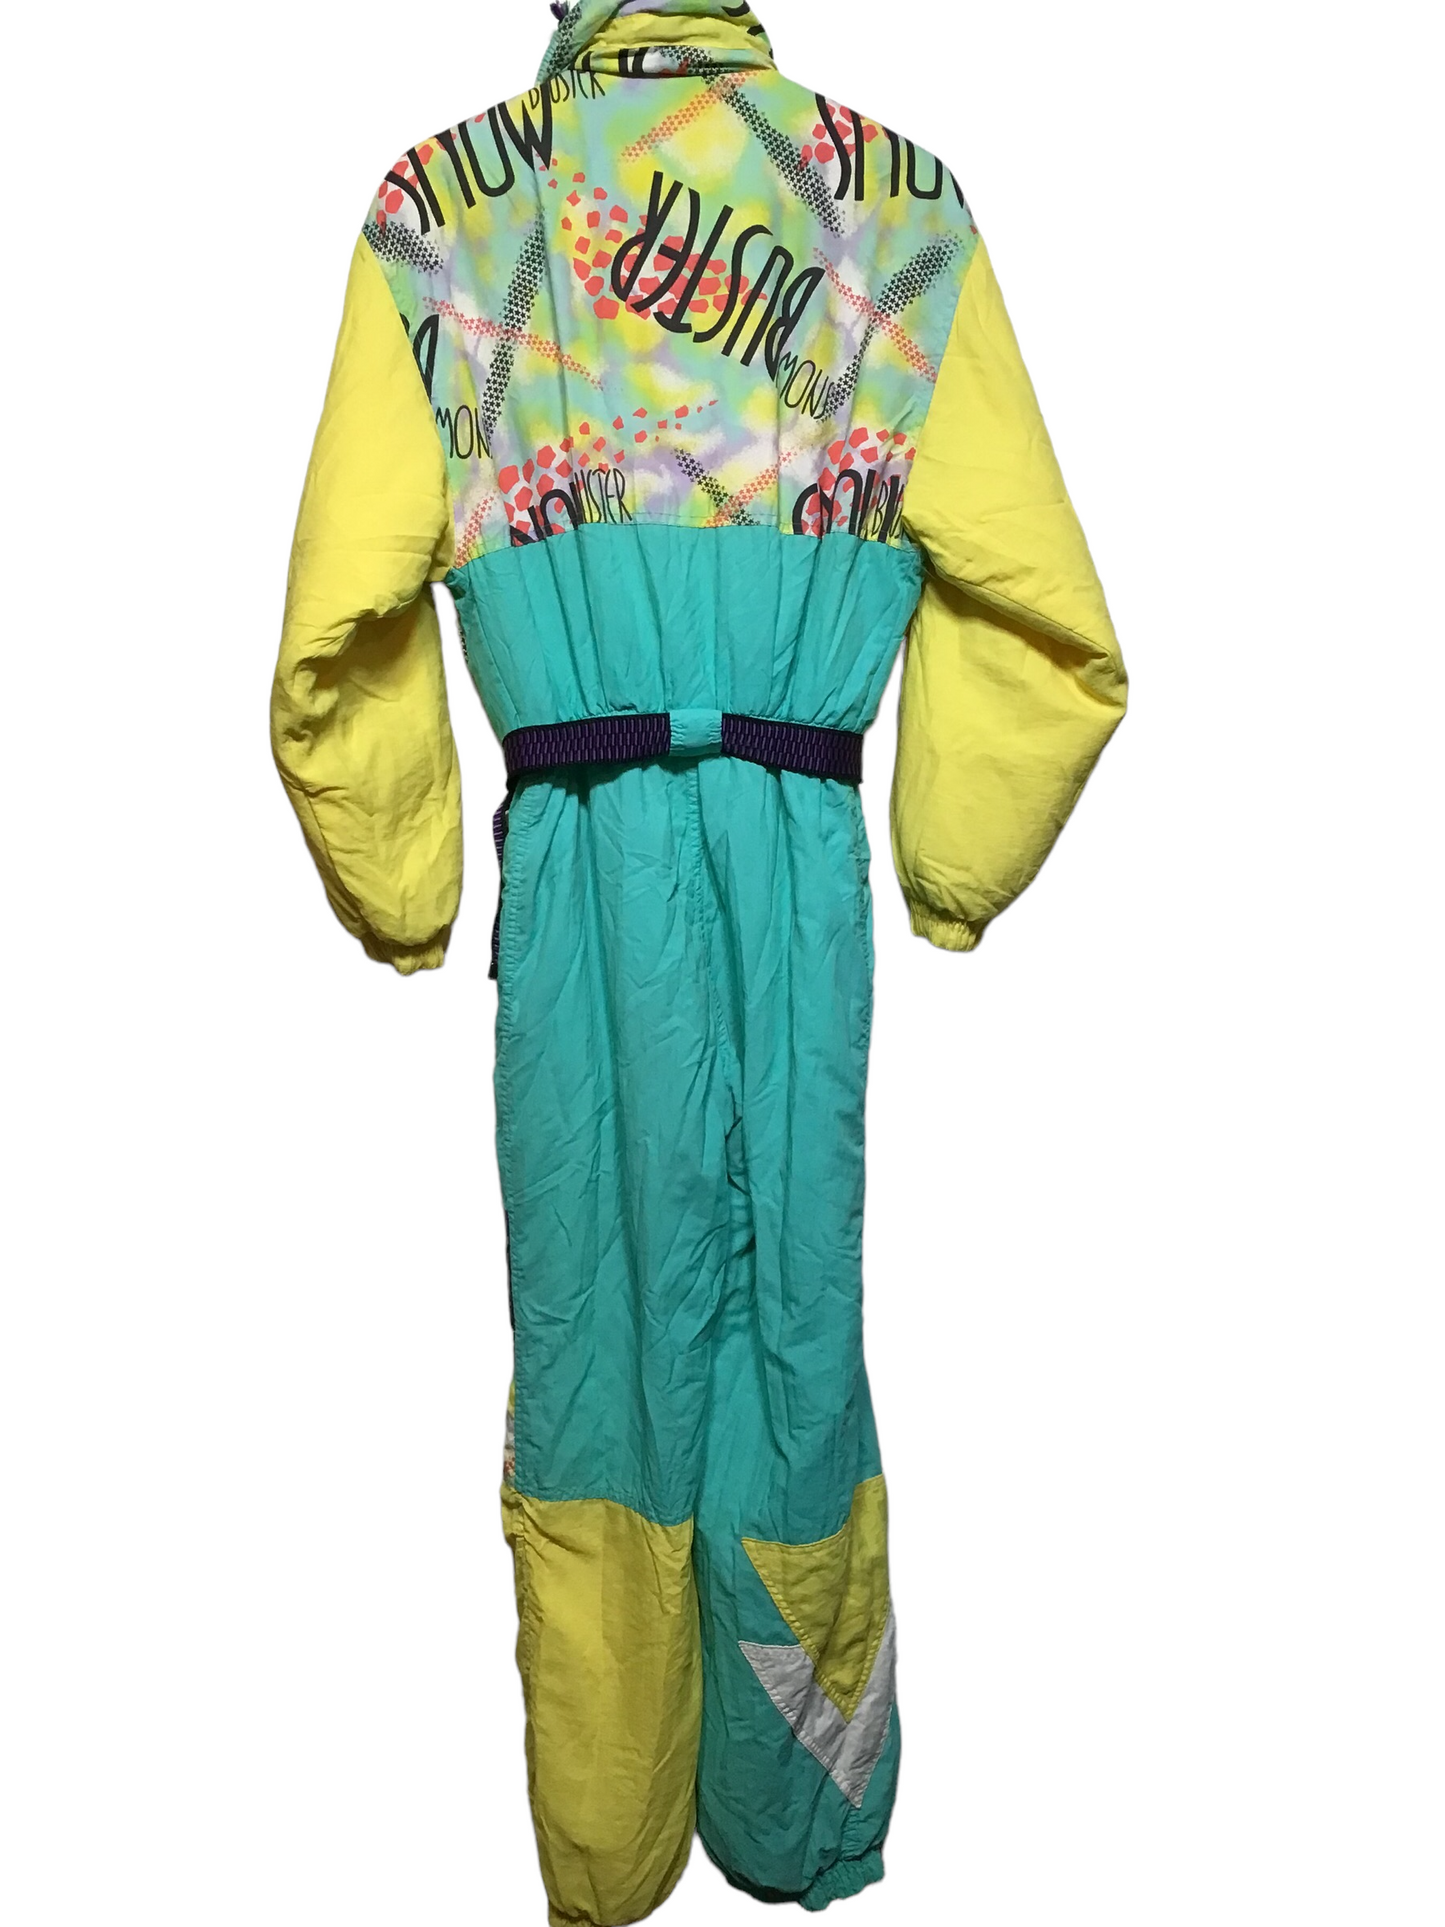 Snow Buster Ski Suit (Size M)